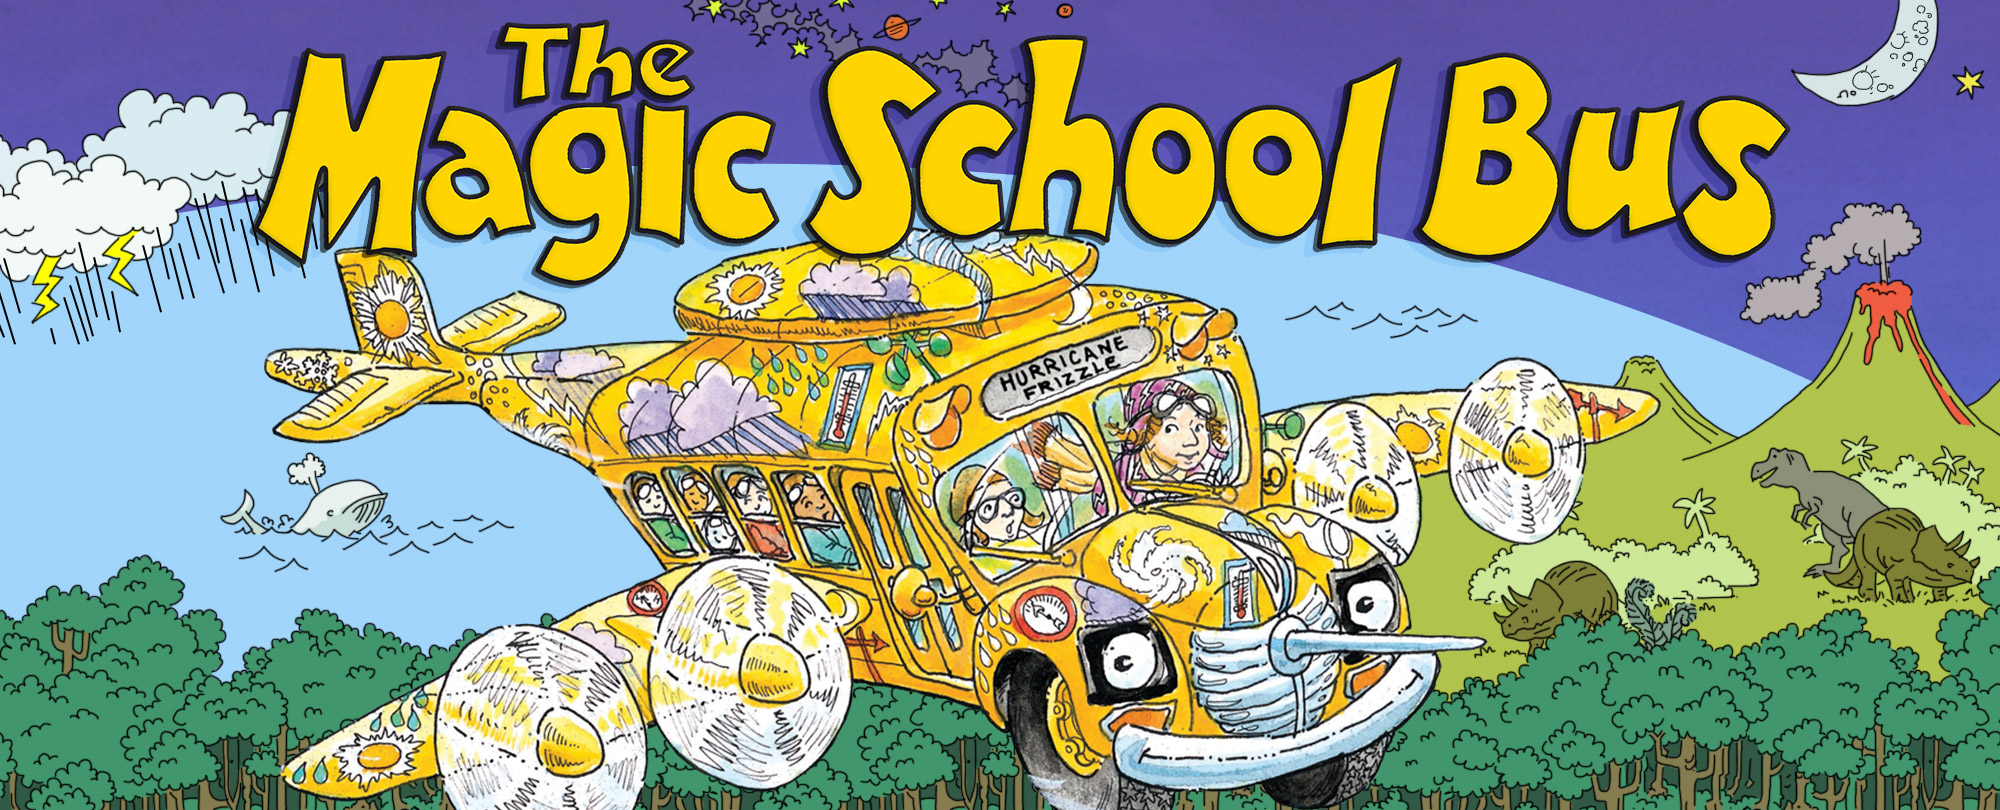 https://www.scholastic.com/kids/books/the-magic-school-bus/